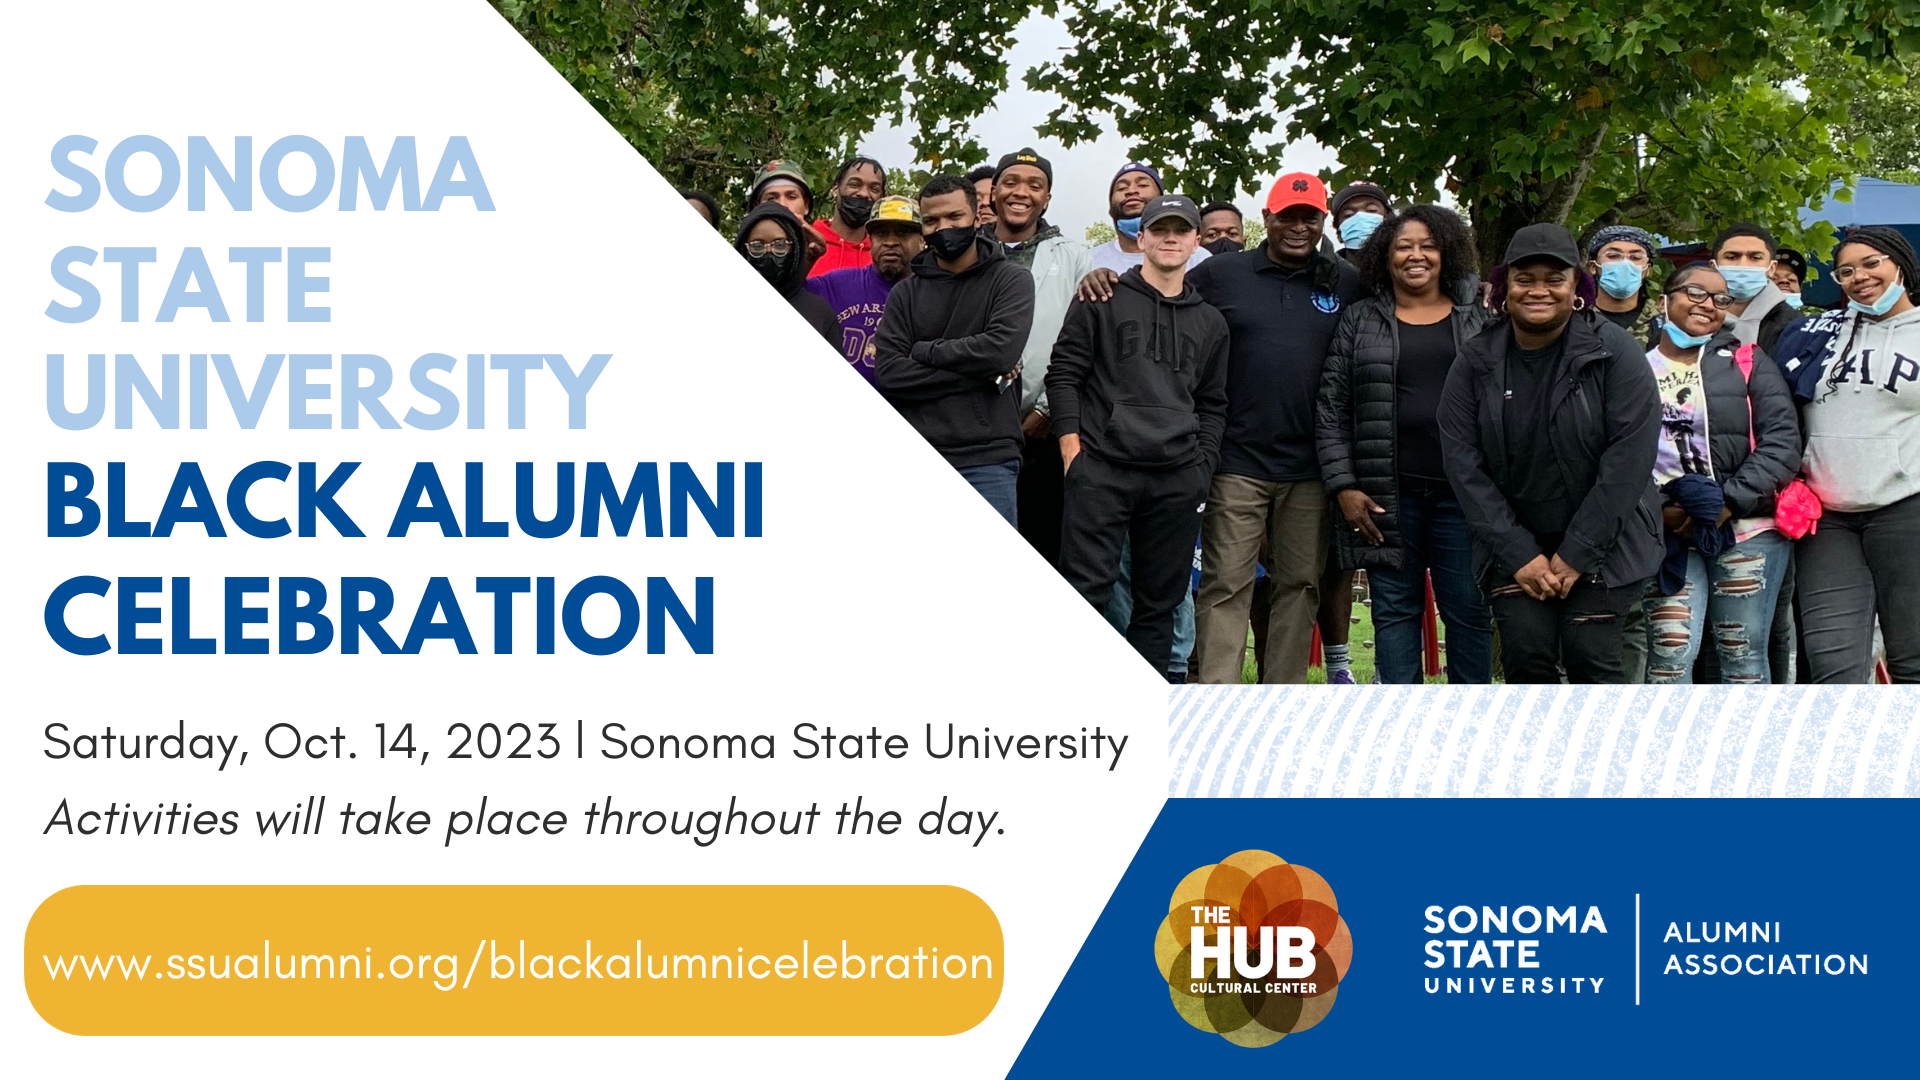 Sonoma State University Black Alumni Celebration